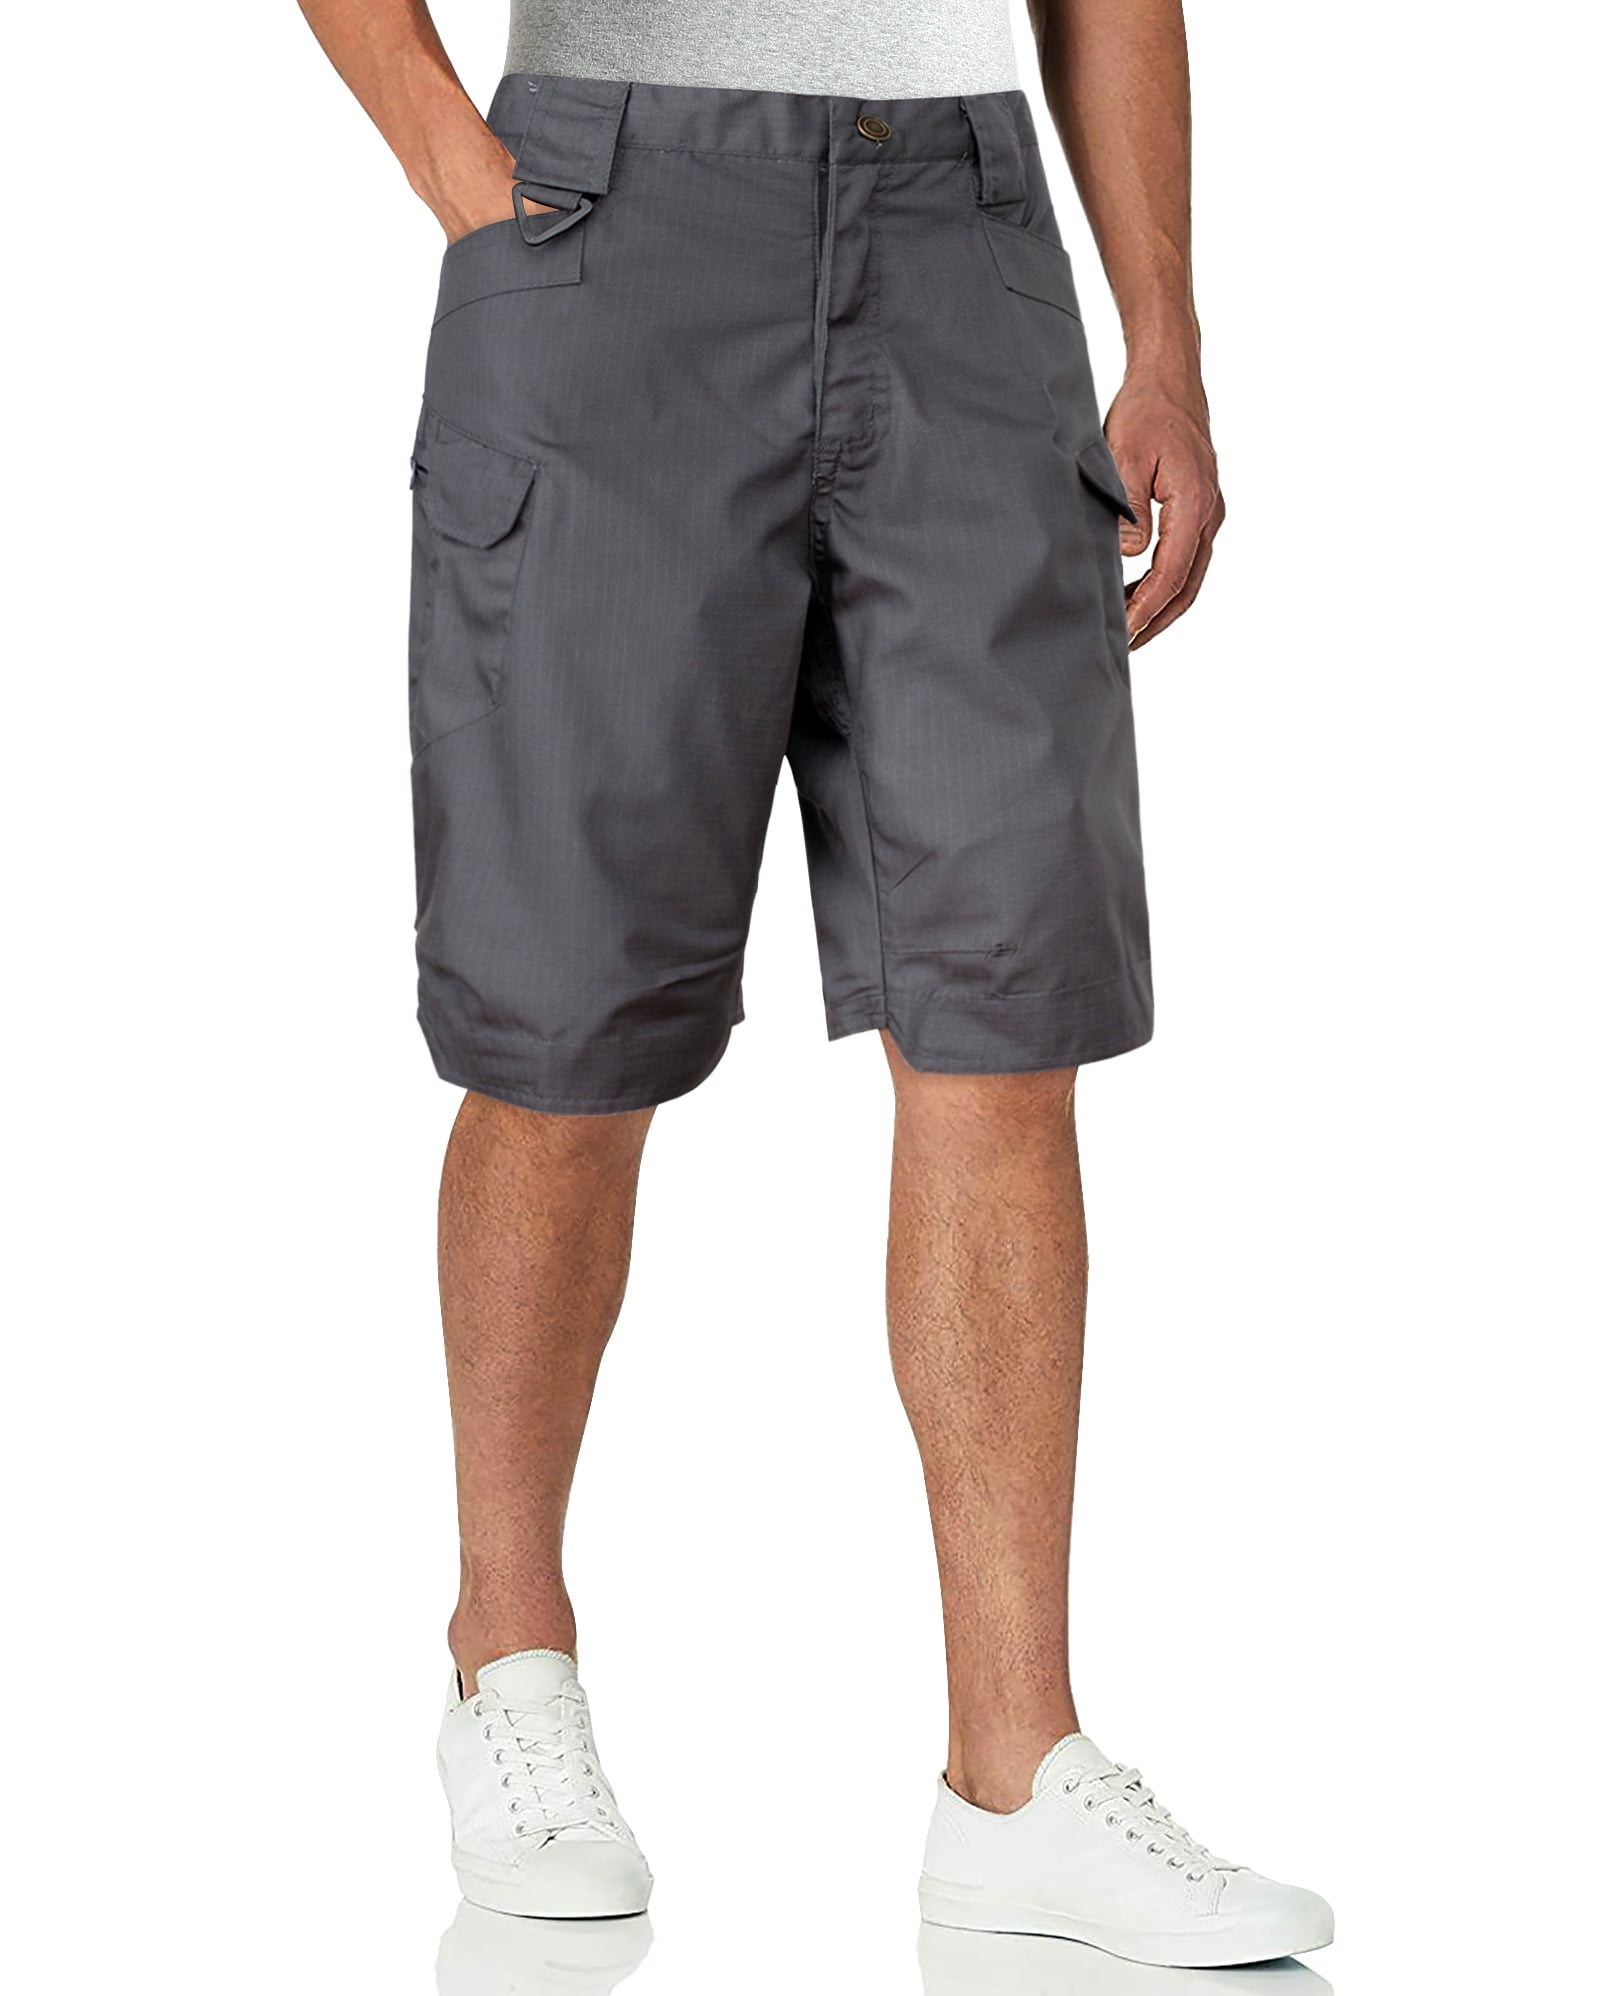 Alimens & Gentle Mens Cargo Short Elastic Waist Multi-Pocket Outdoor Military Tactical Shorts